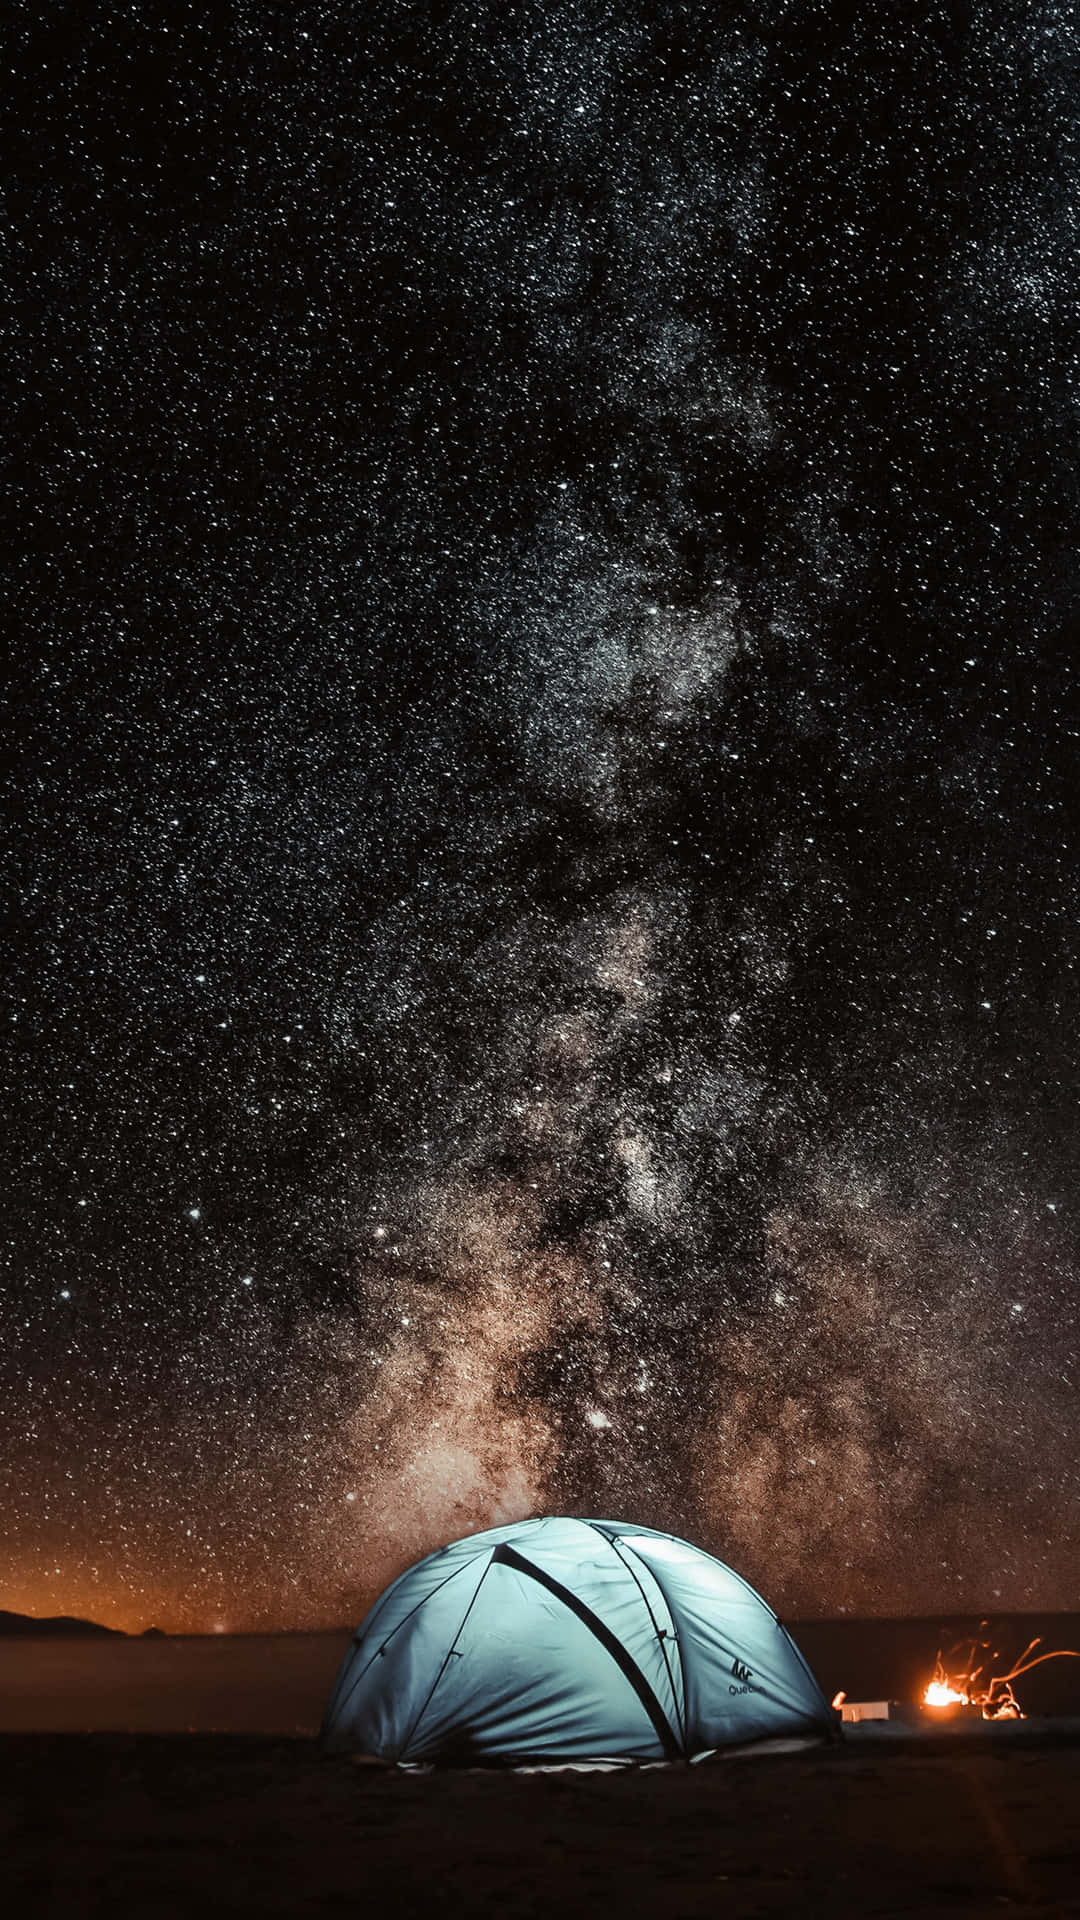 Stunning 4k Starry Sky Captured At Night Wallpaper